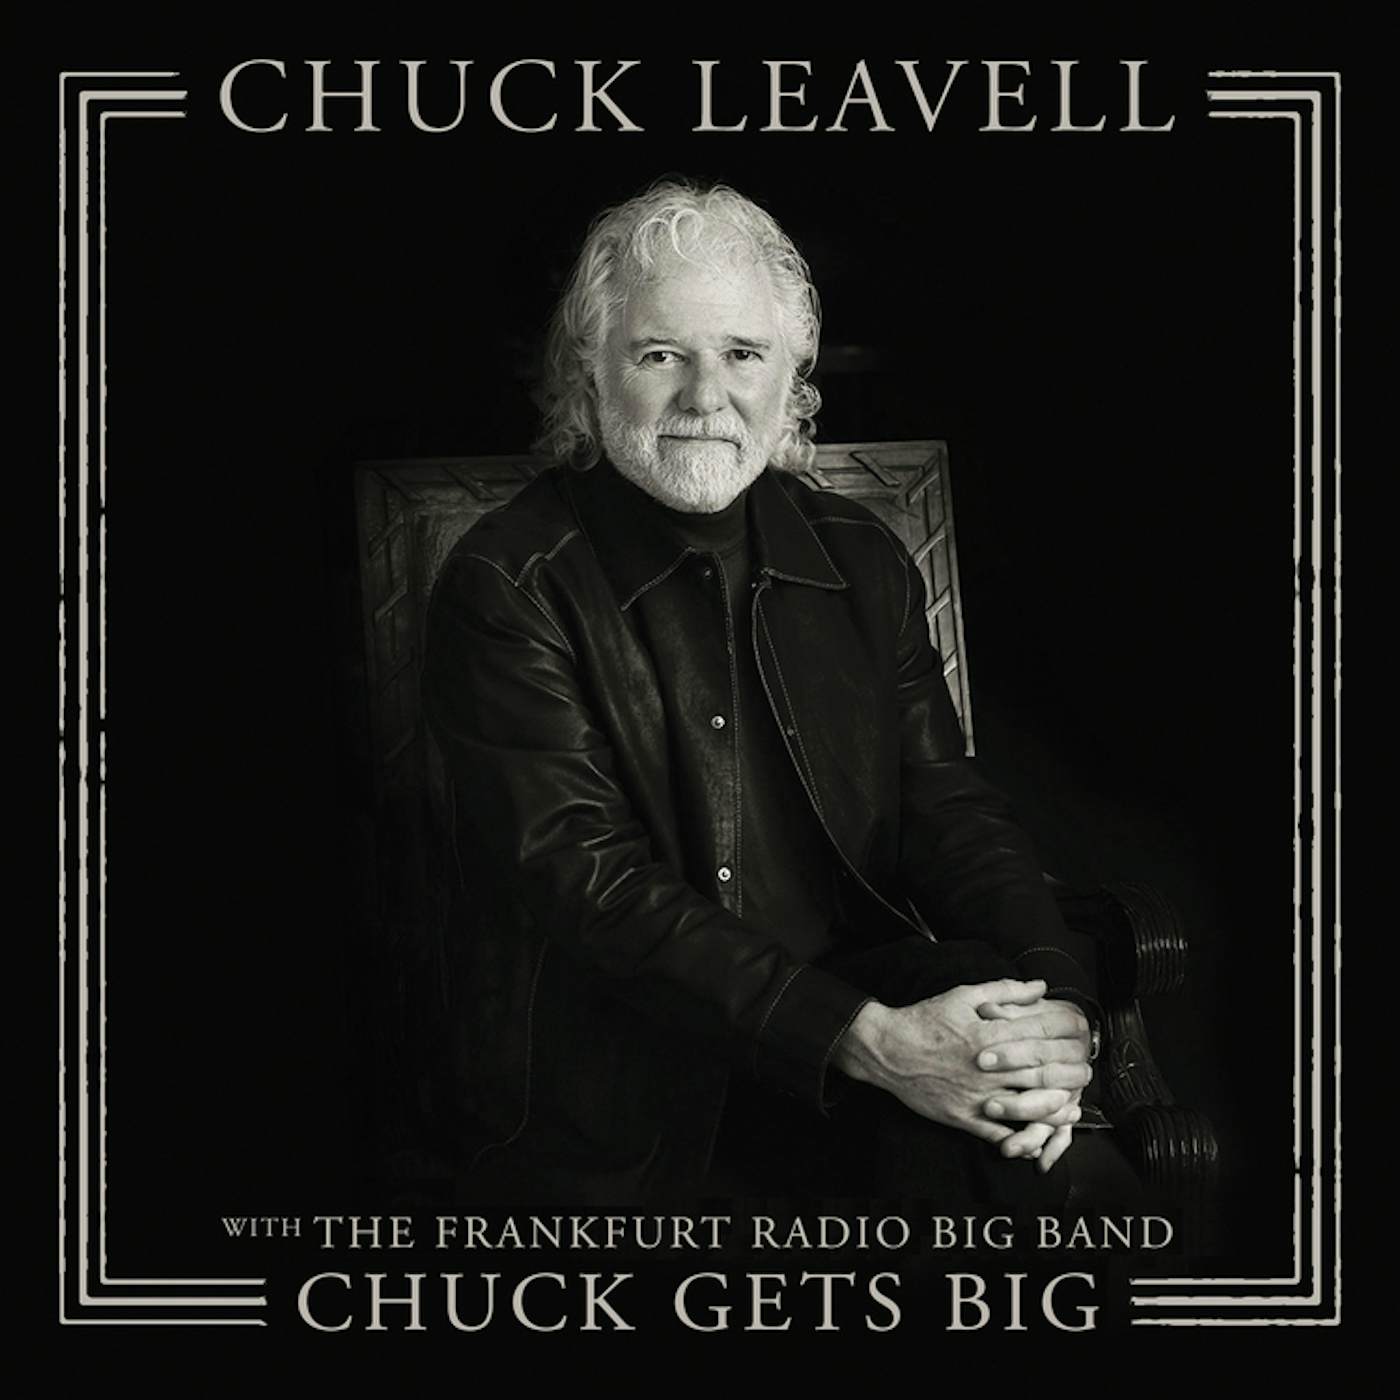 Chuck Leavell CHUCK GETS BIG (WITH THE FRANKFURT RADIO BIG BAND) CD